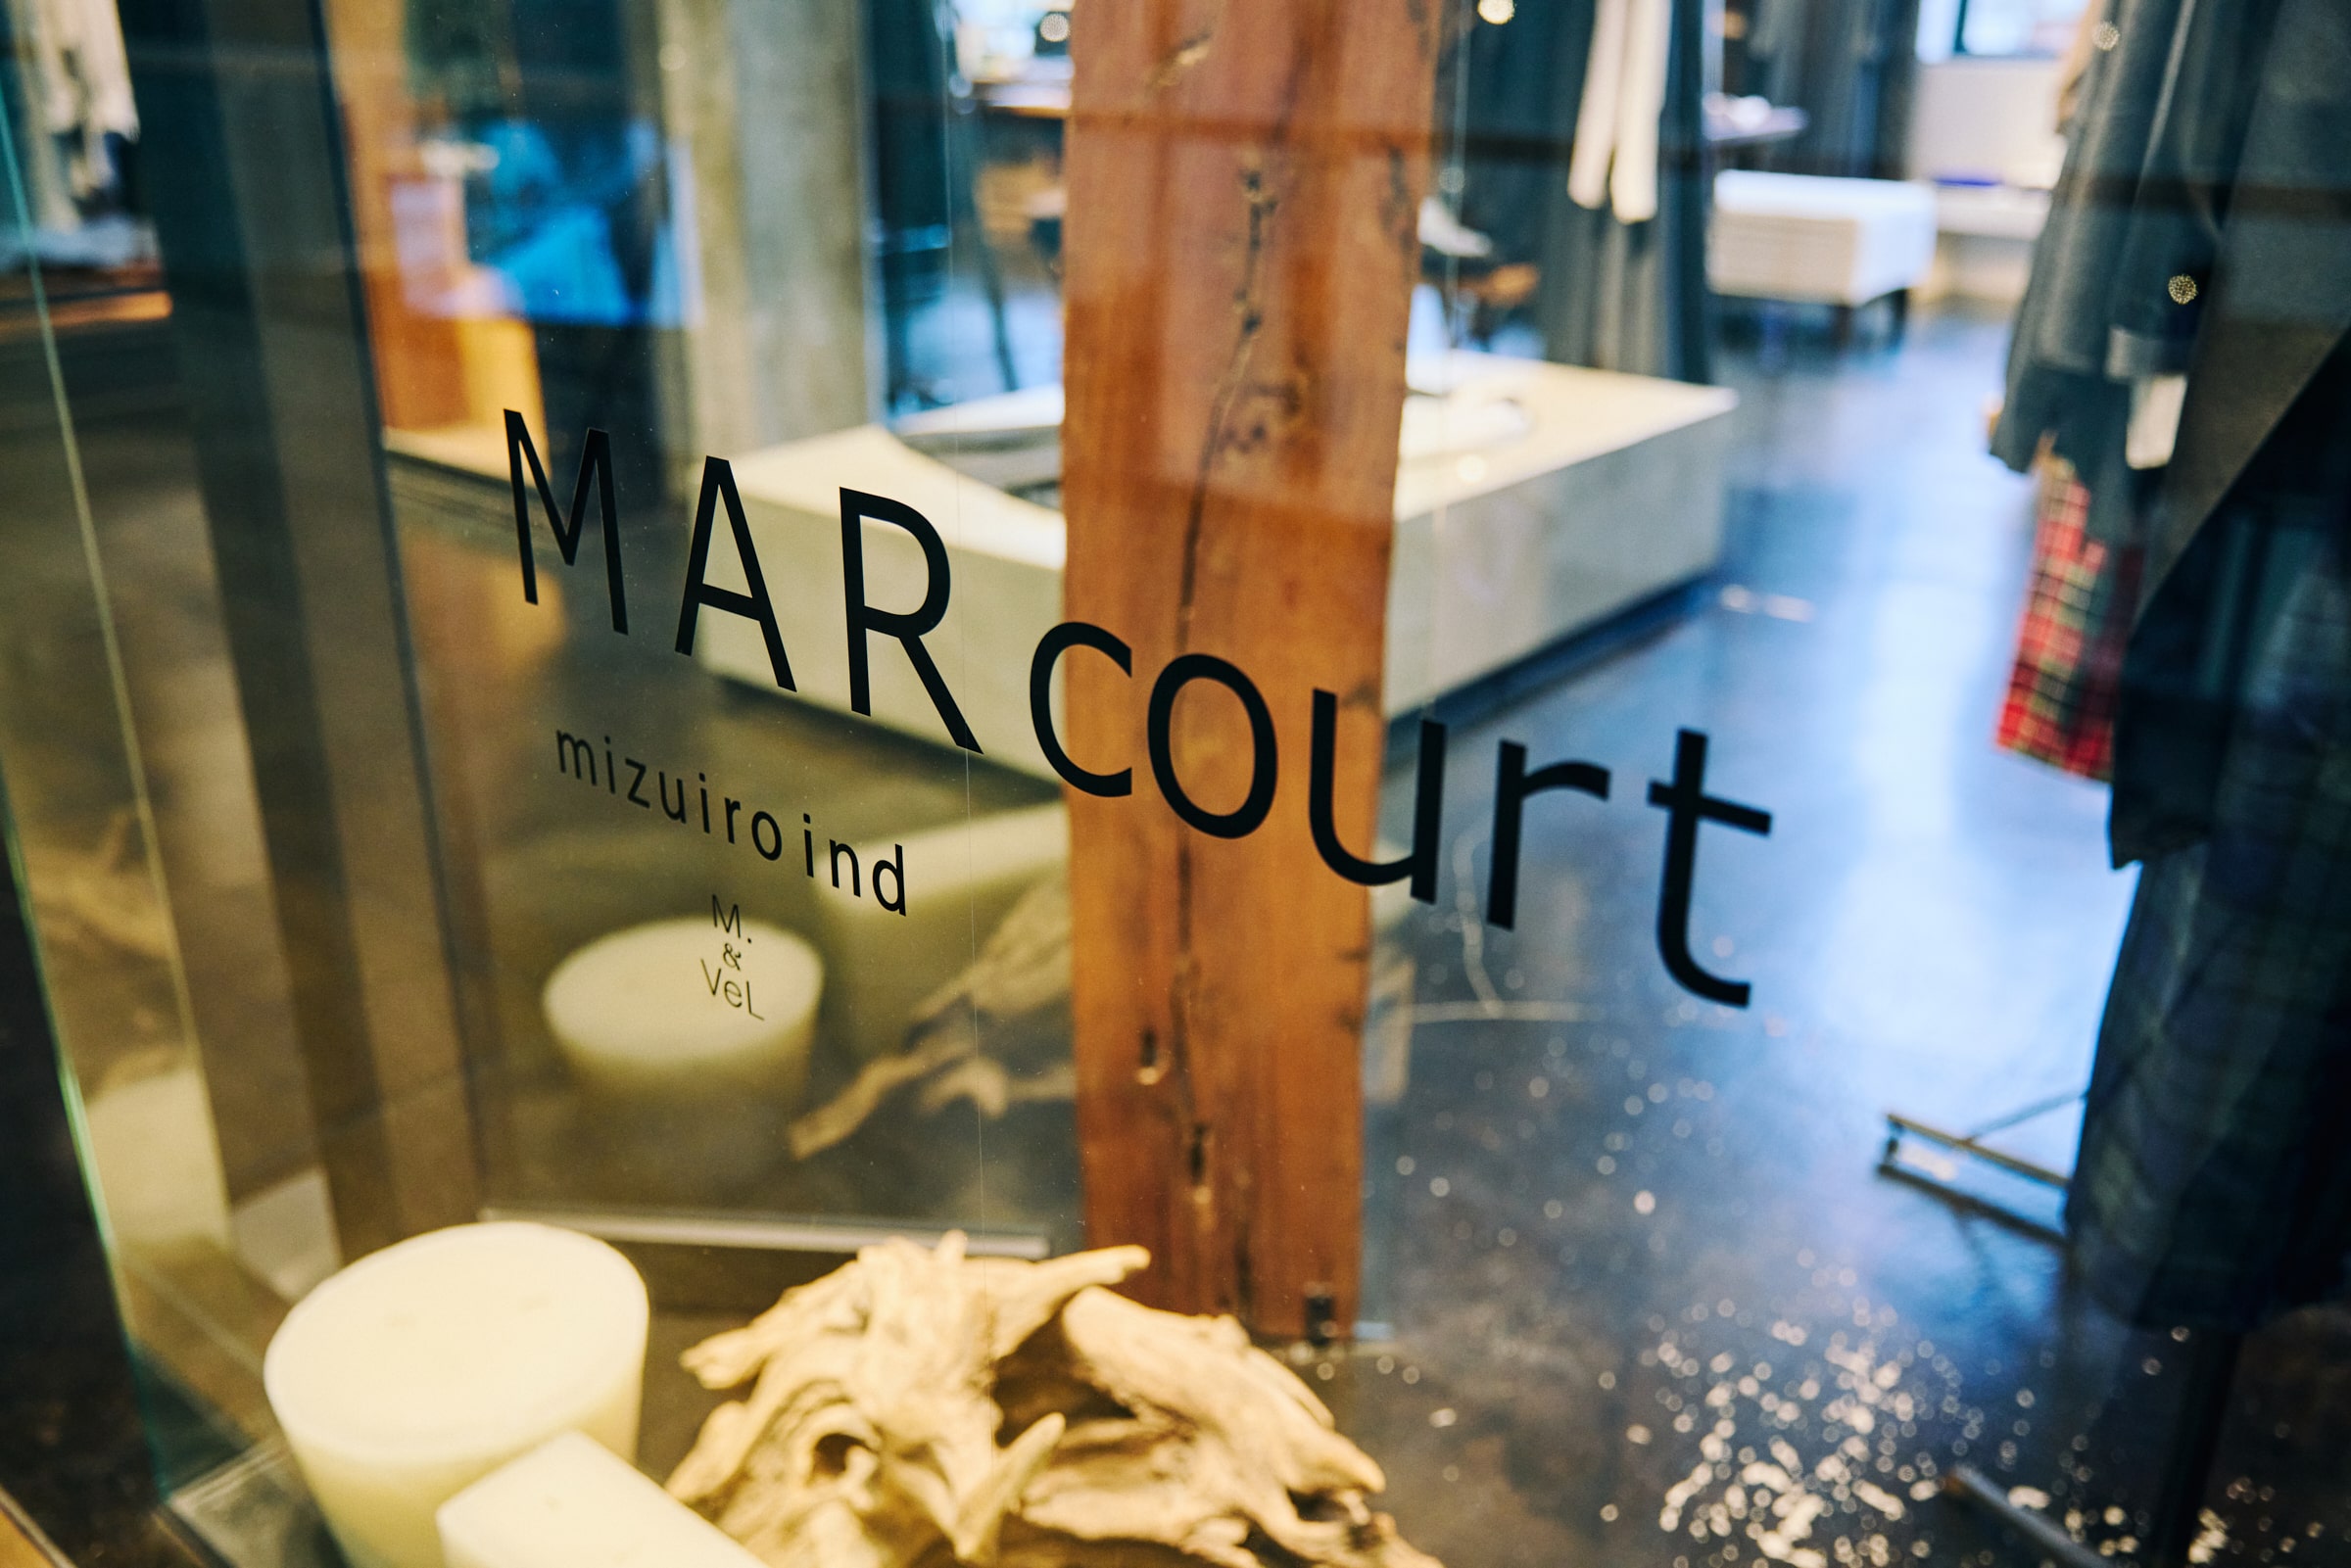 MARcourt 丸の内店